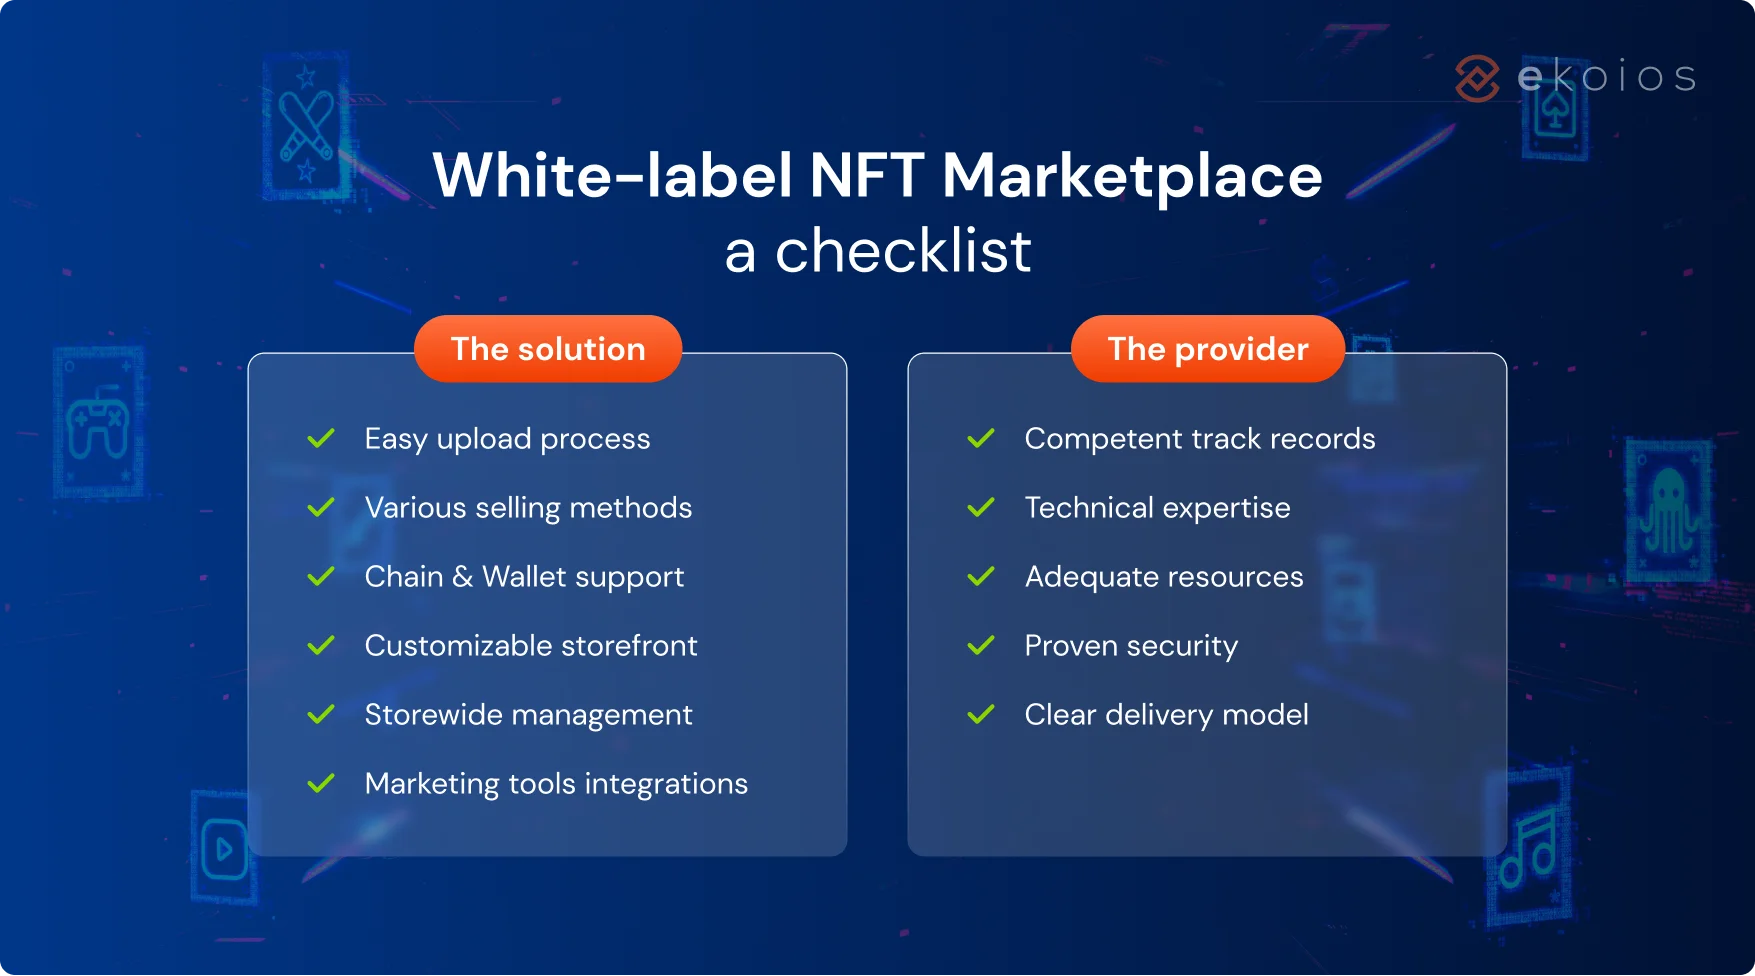 white label nft marketplace key features checklist